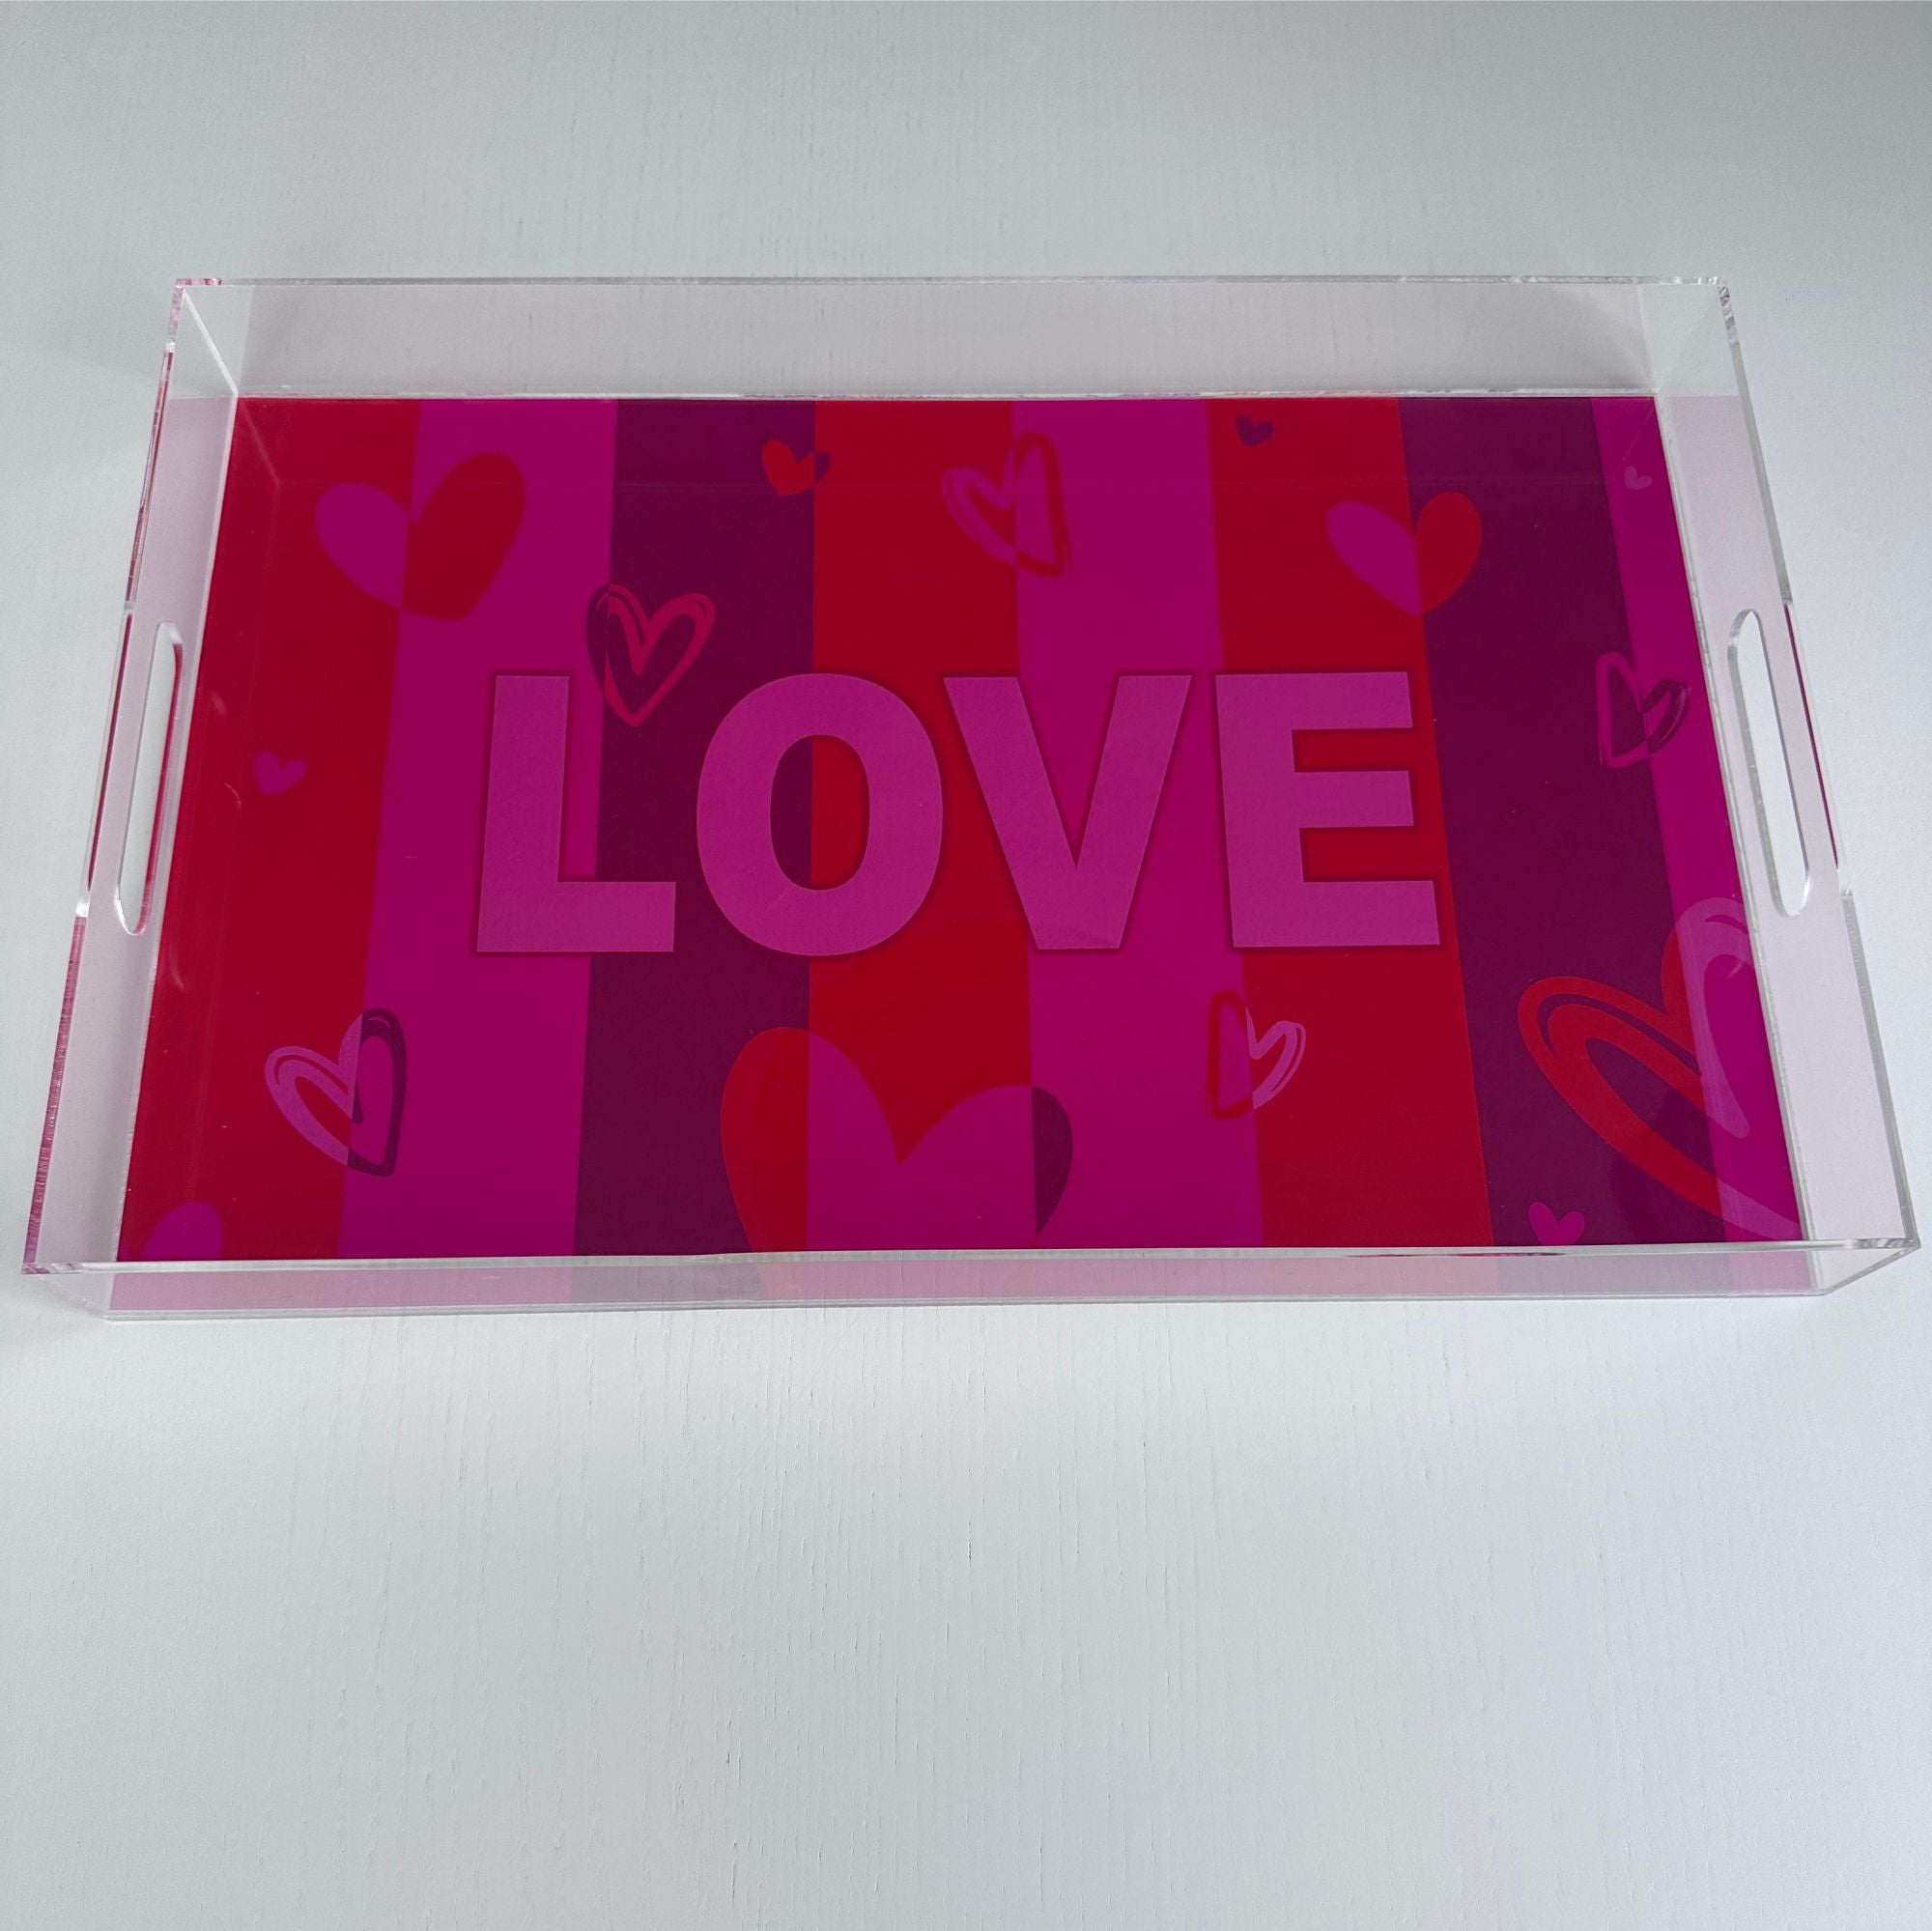 Endless possibilities acrylic tray - Insert Valentine